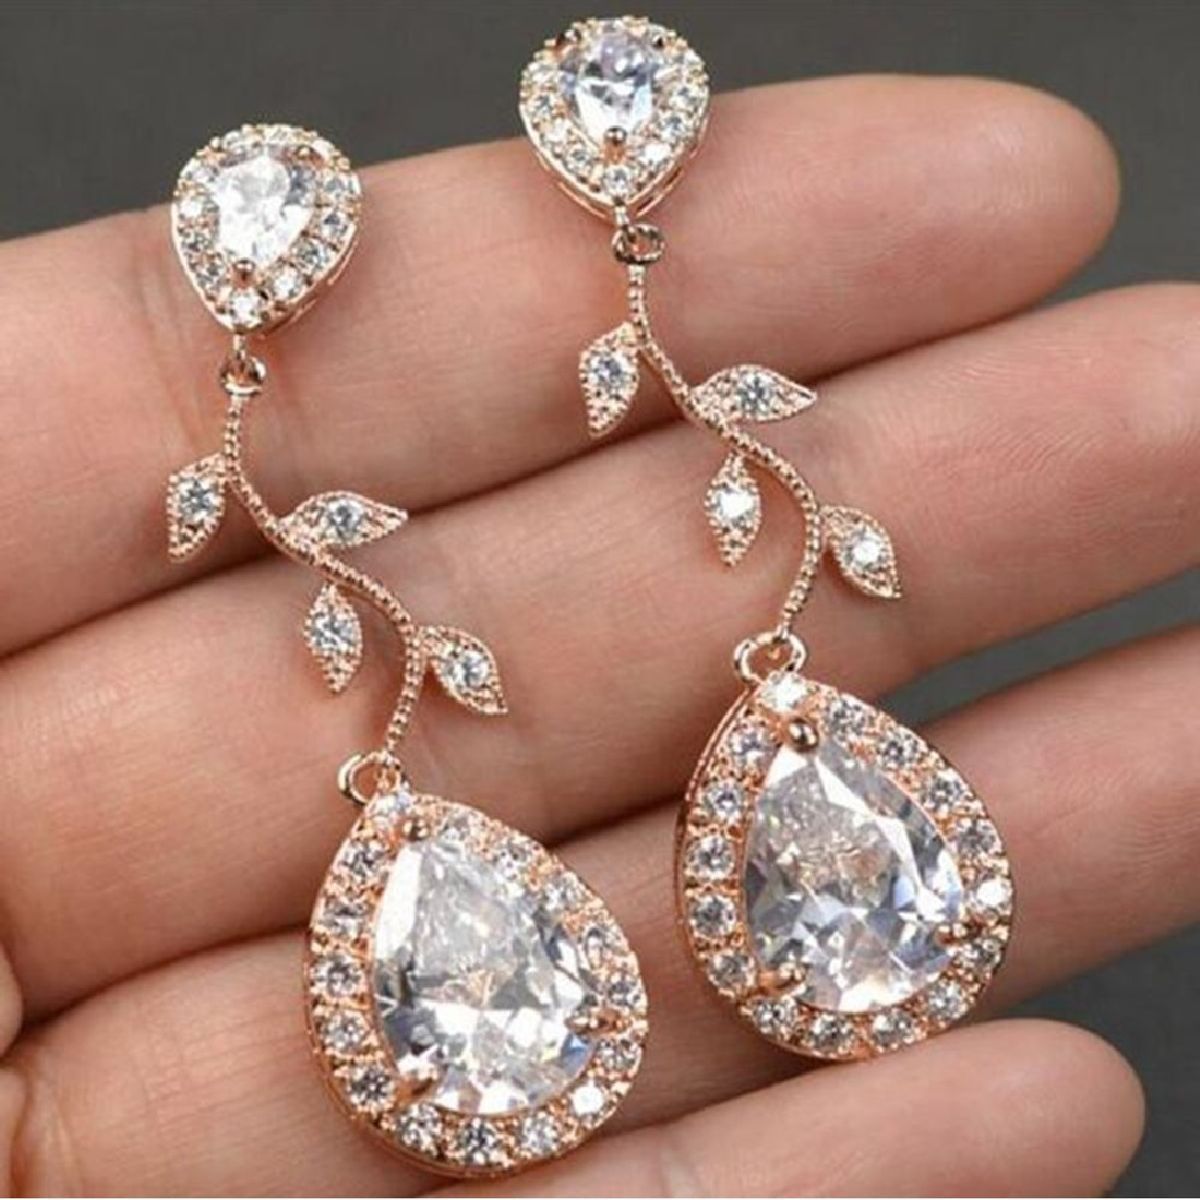 Top more than 79 rose gold 18k earrings